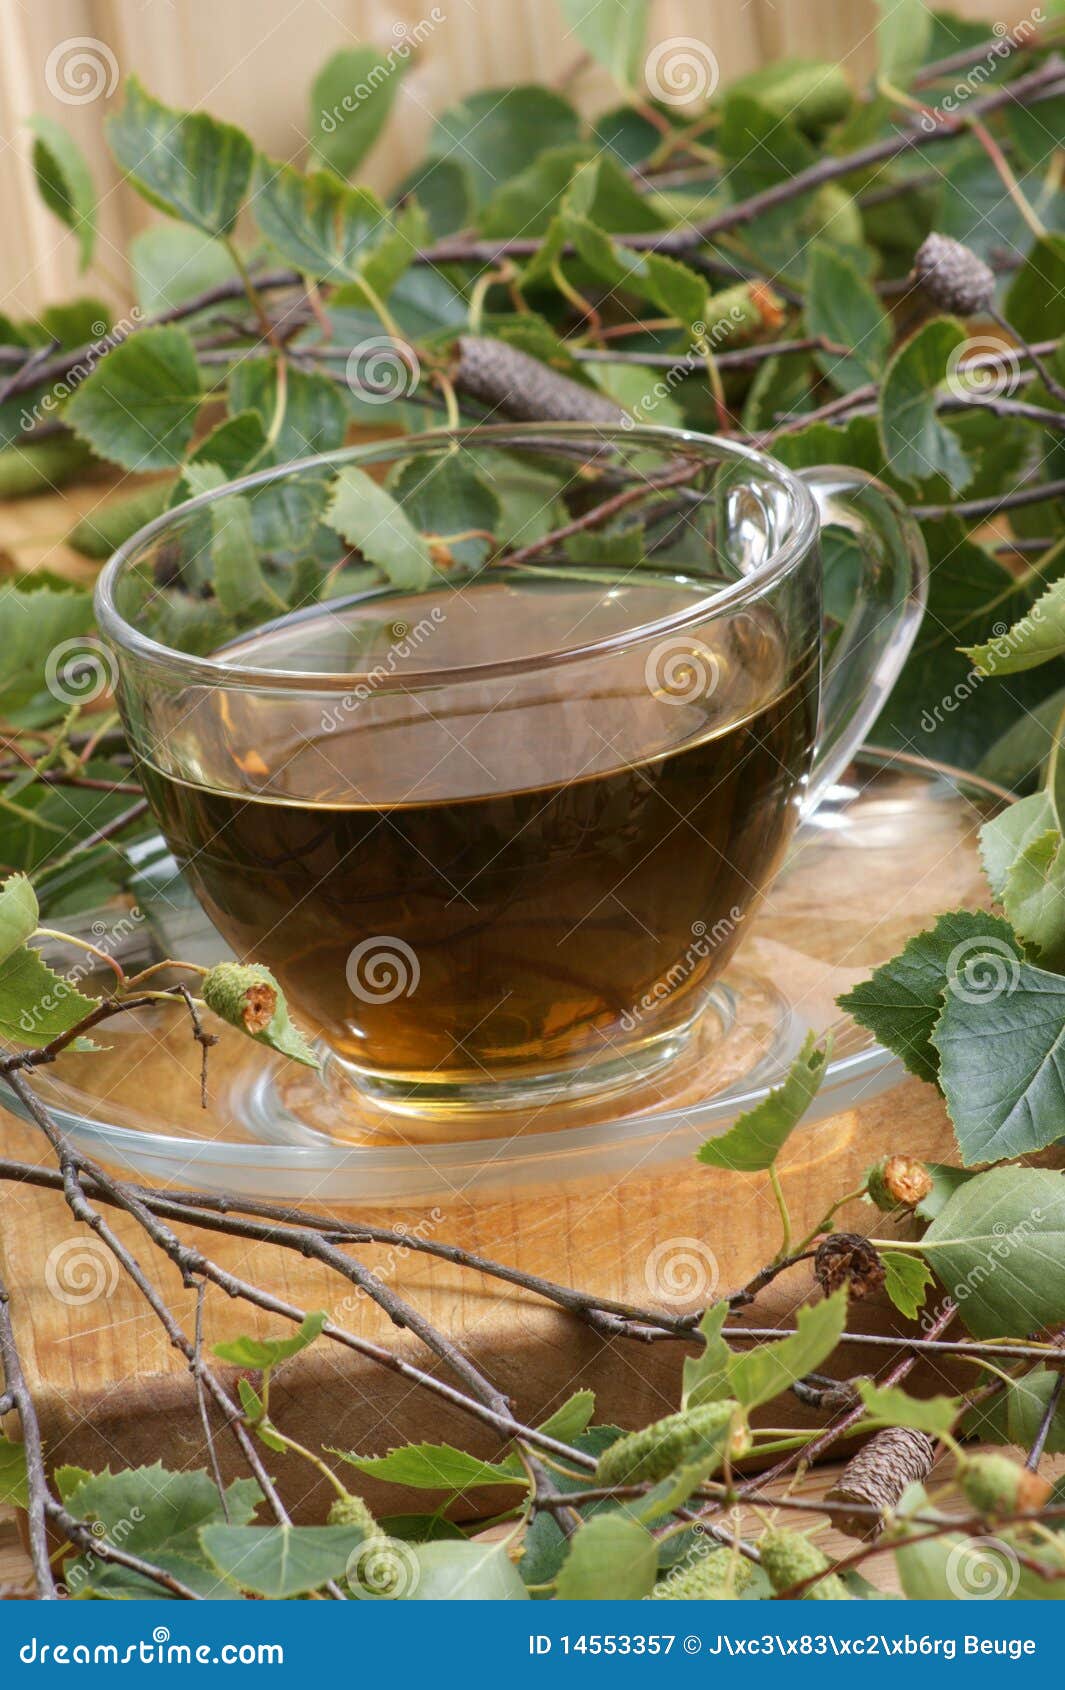 Birch leaf tea stock image. Image of health, kitchen 14553357